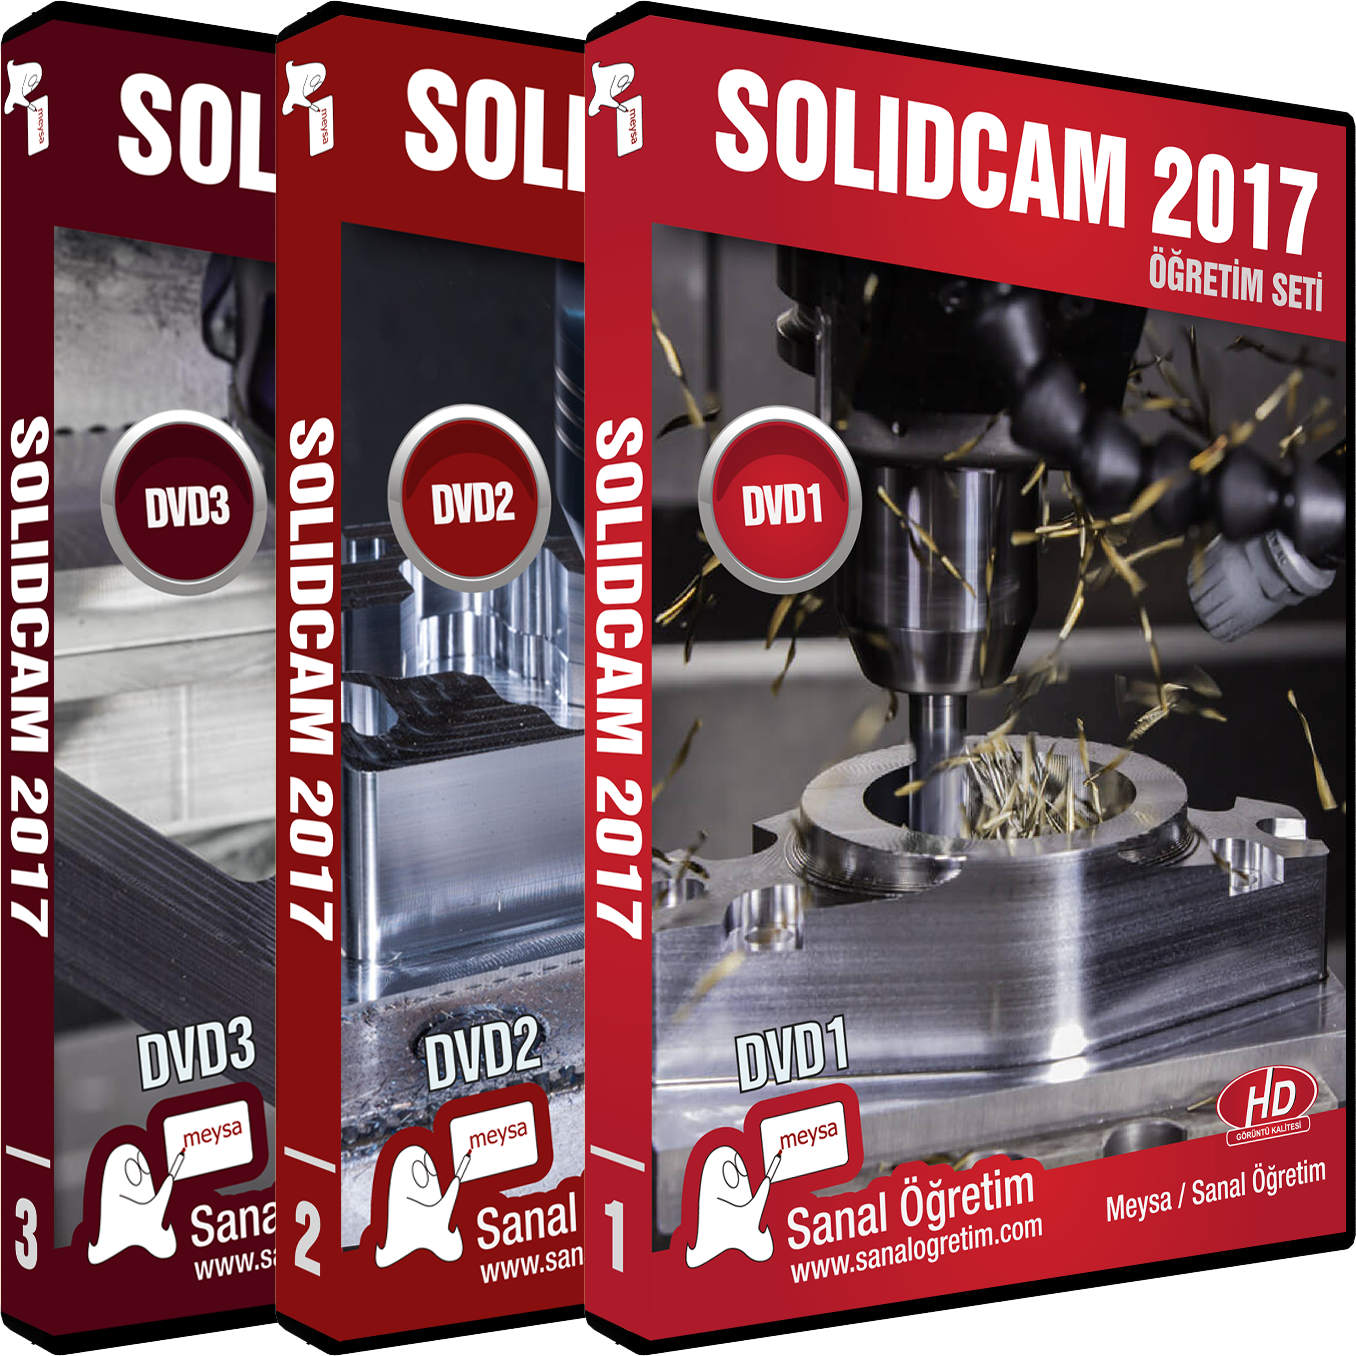 Solidcam 2017 Video Ders Eğitim Seti İndir İzle Download Yöntemi